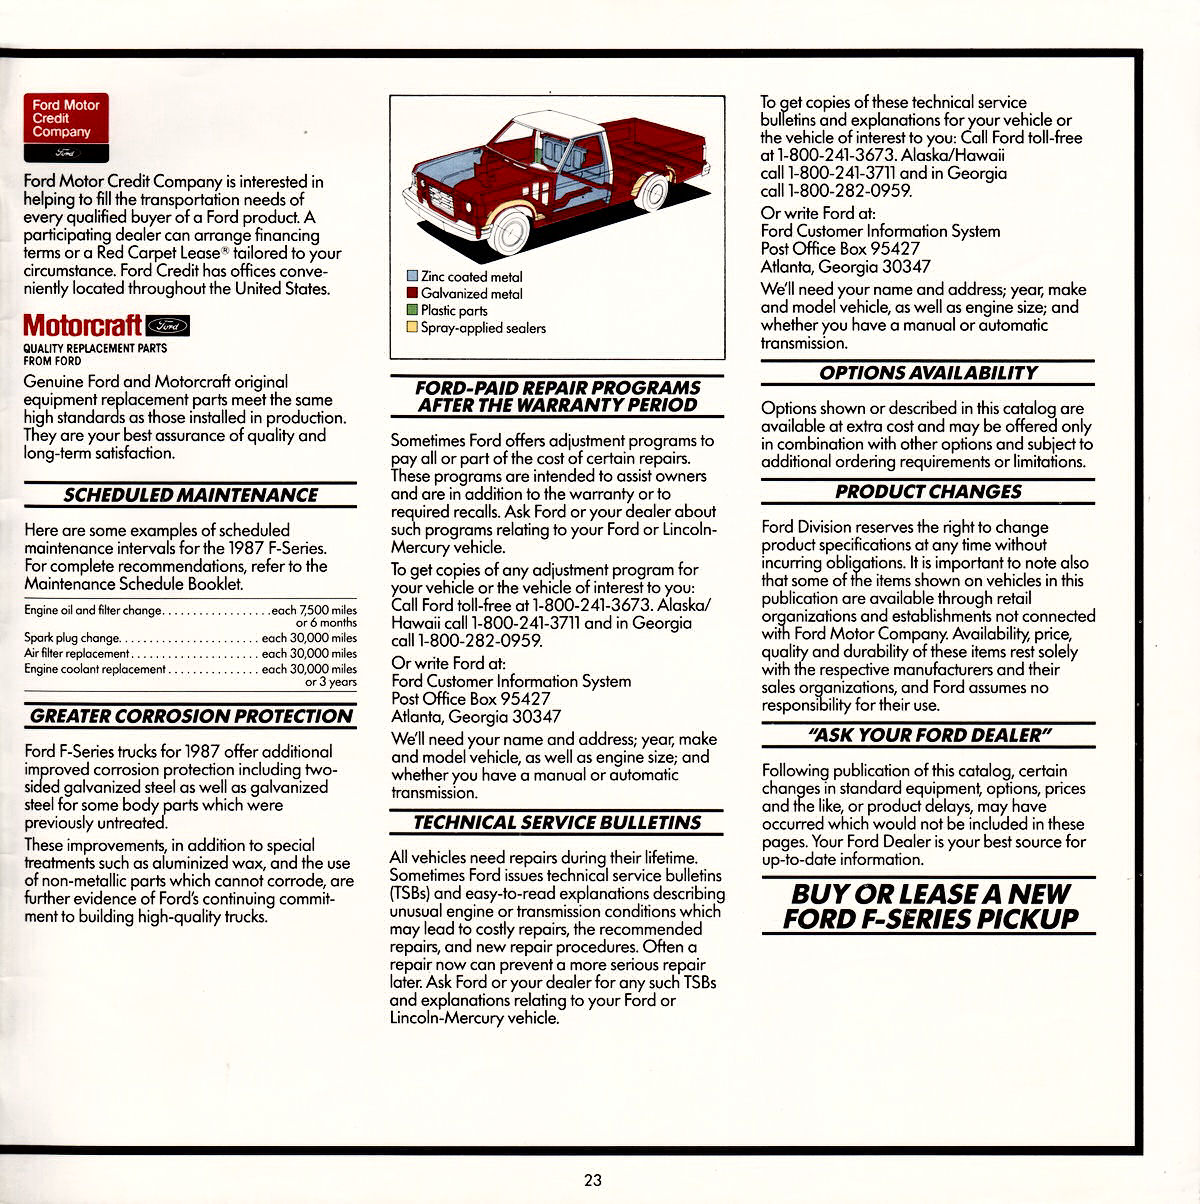 1987_Ford_F-Series_Pickup-23